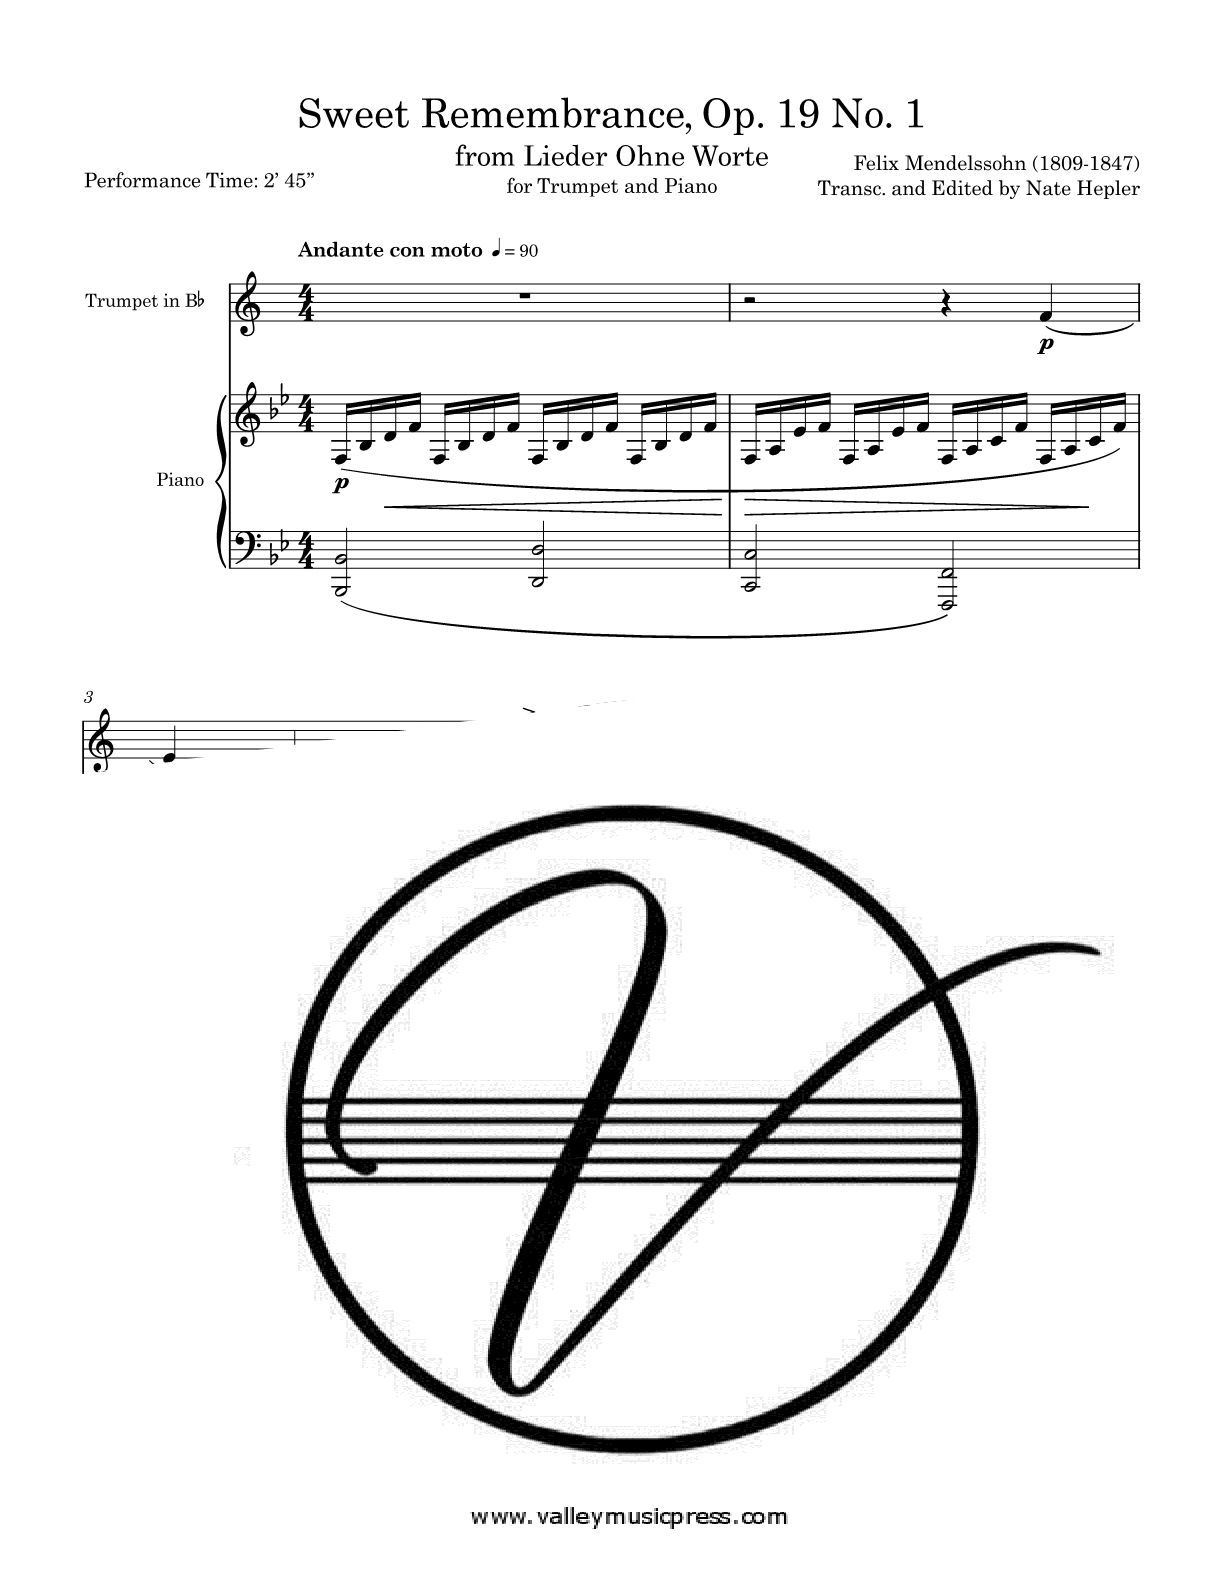 Mendelssohn - Lieder Ohne Worte Sweet Remembrance N1 (Trp & Pno) - Click Image to Close